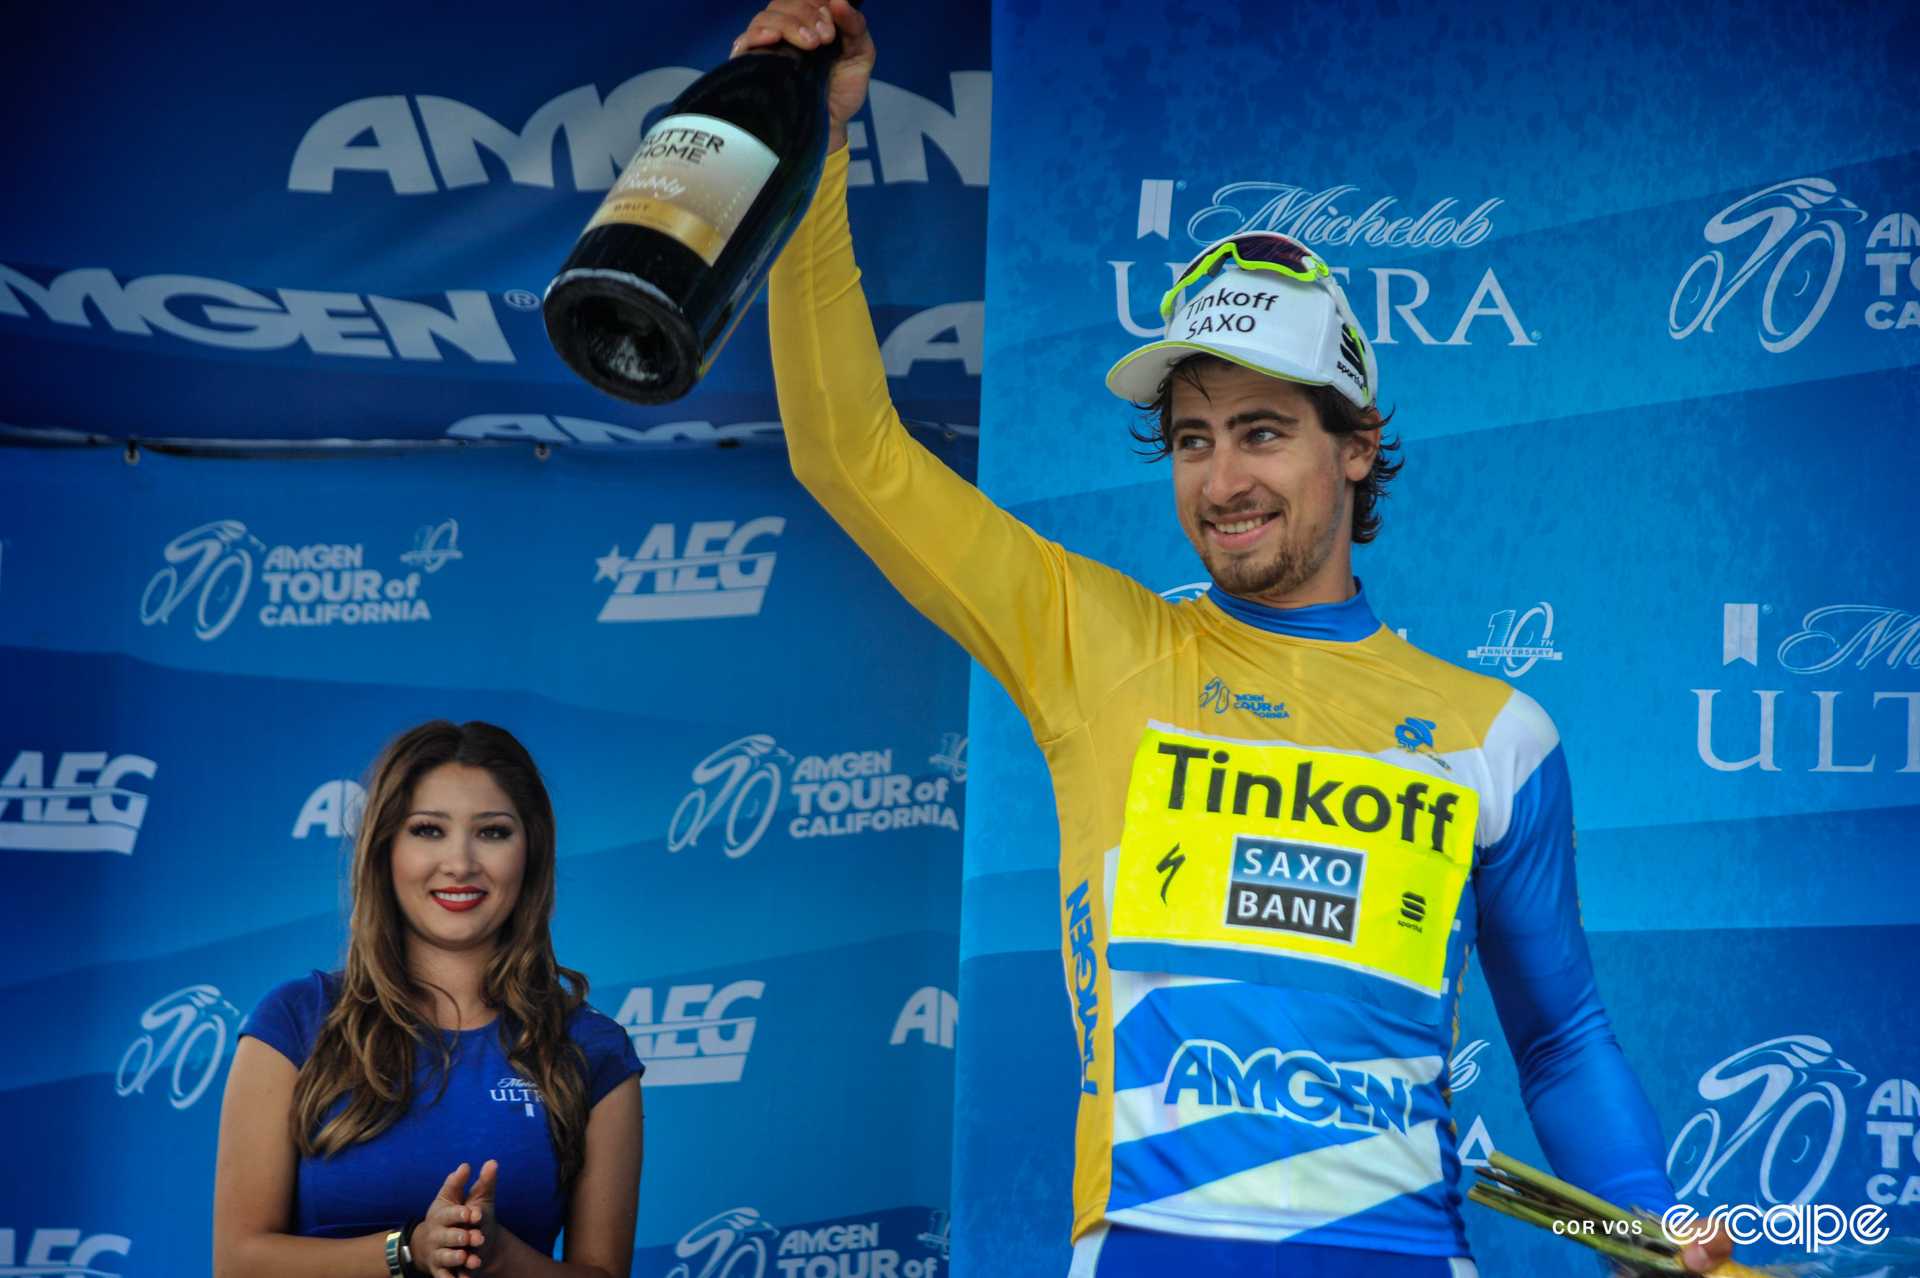 Peter Sagan celebrates winning the 2015 Tour of California, celebrating on the final podium with a fist pump.